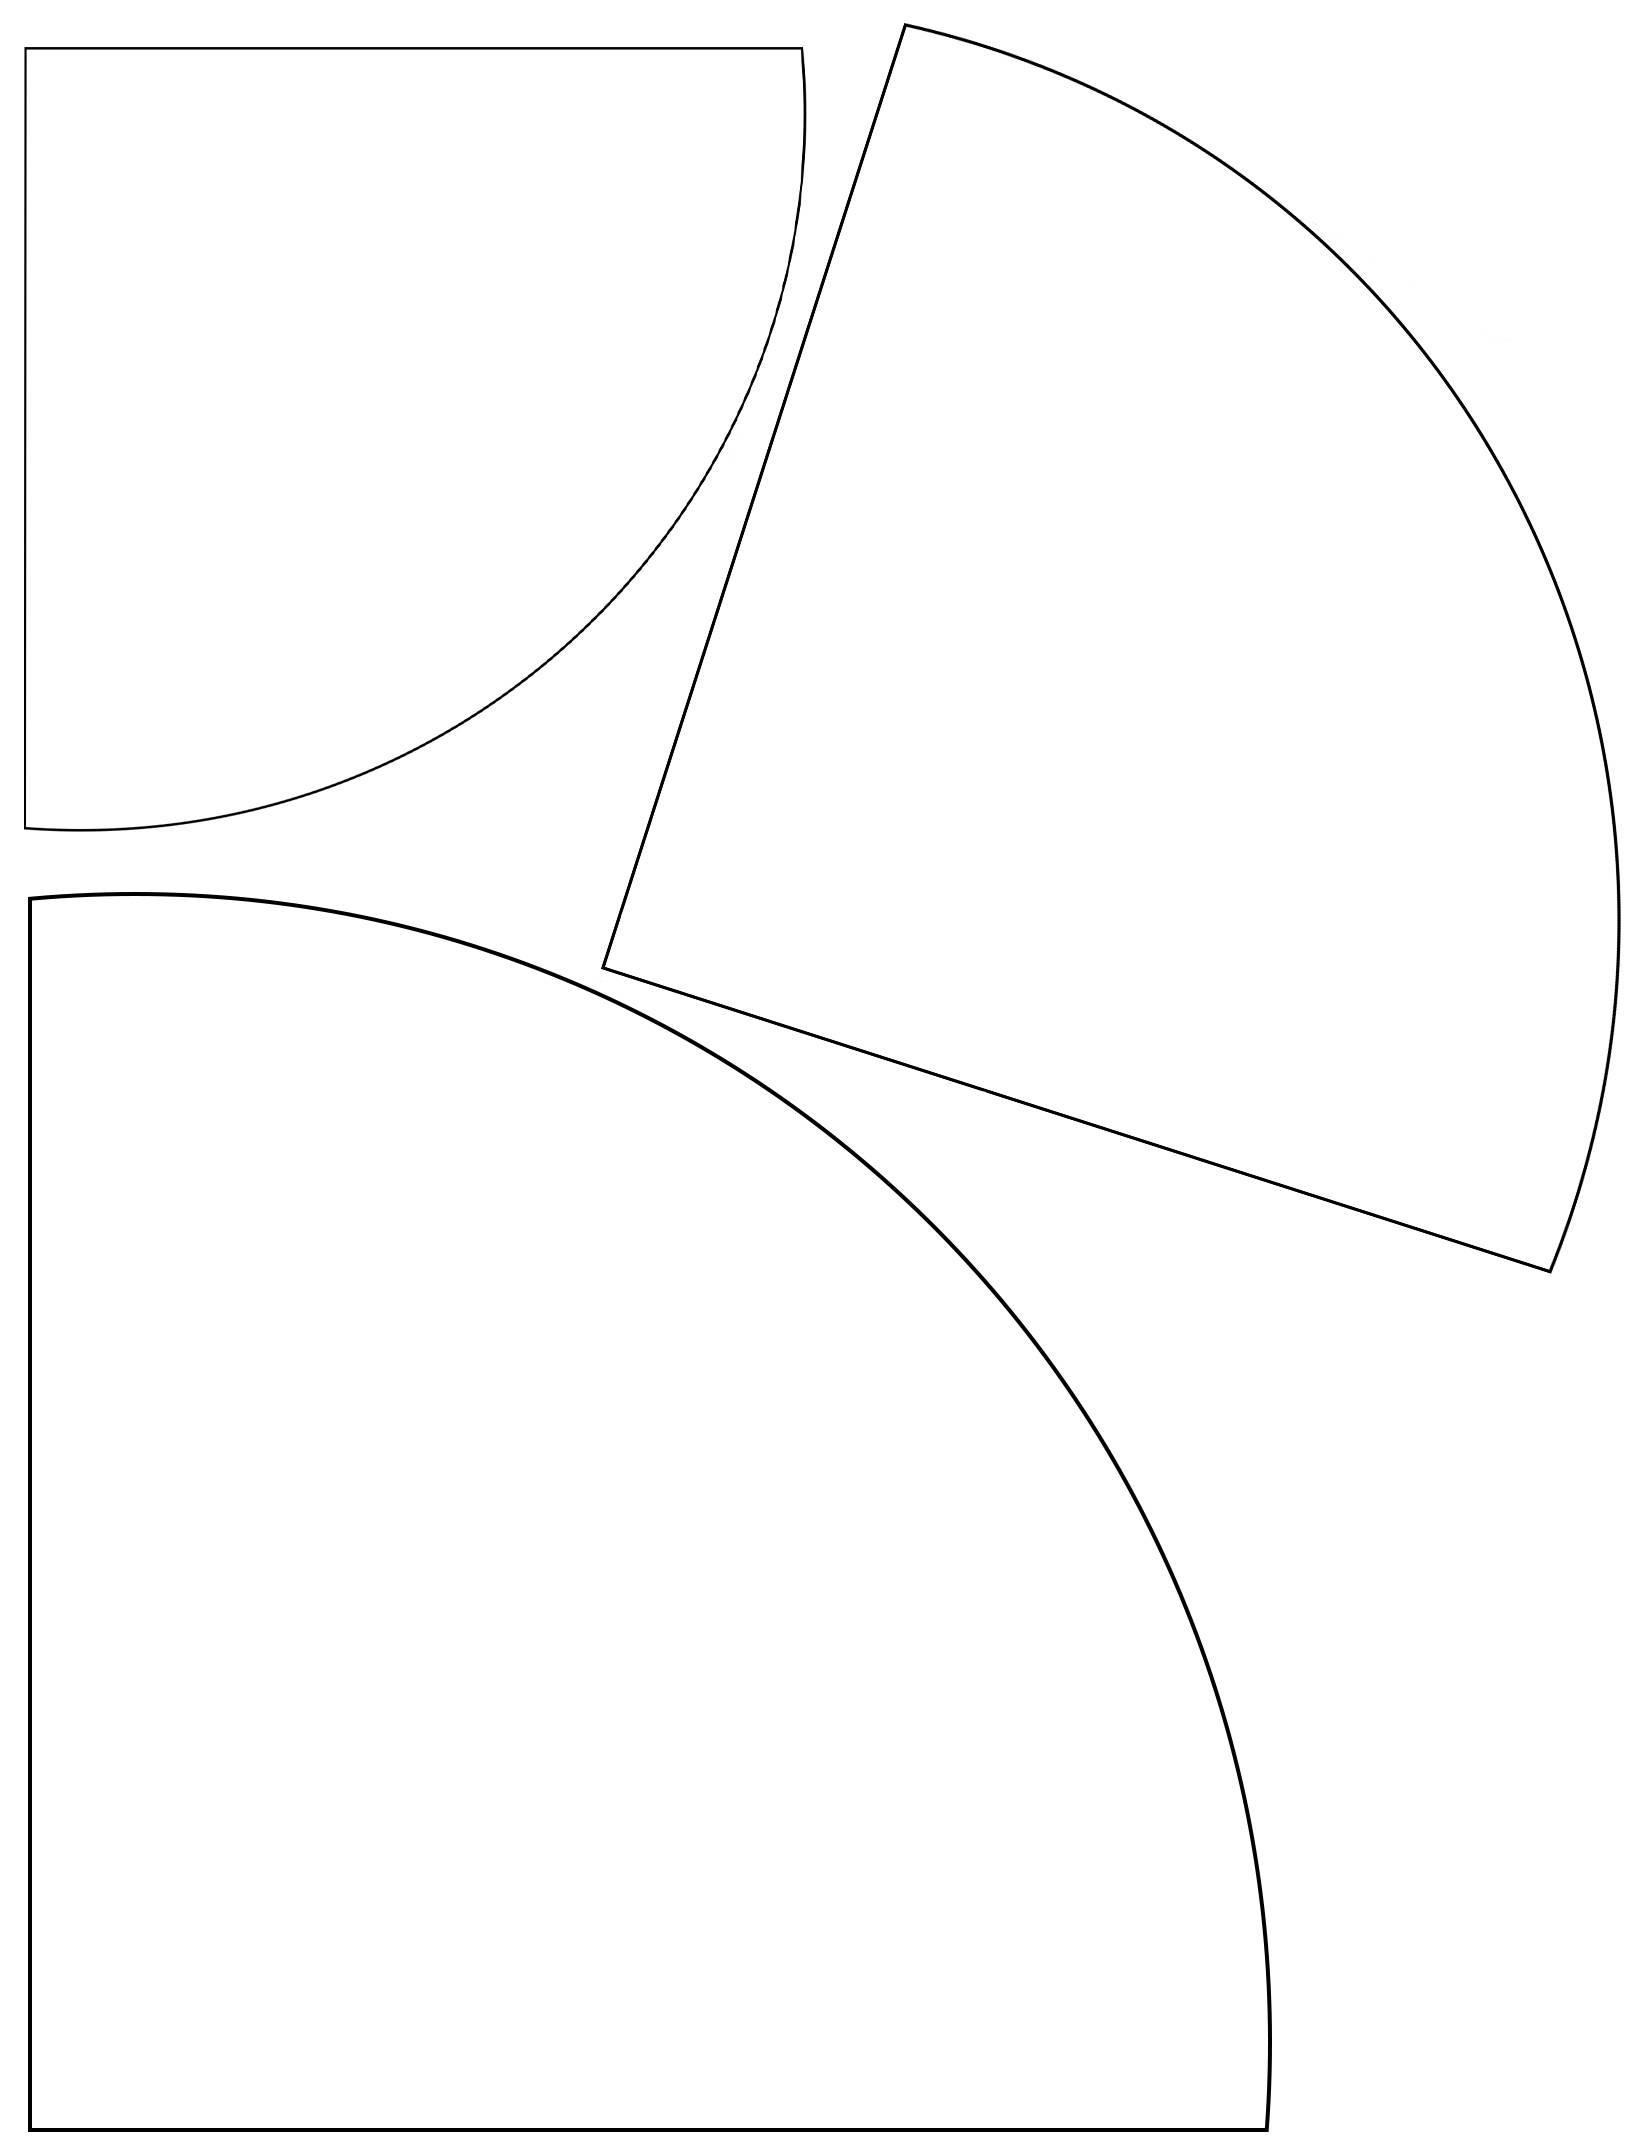 Tree cone templates